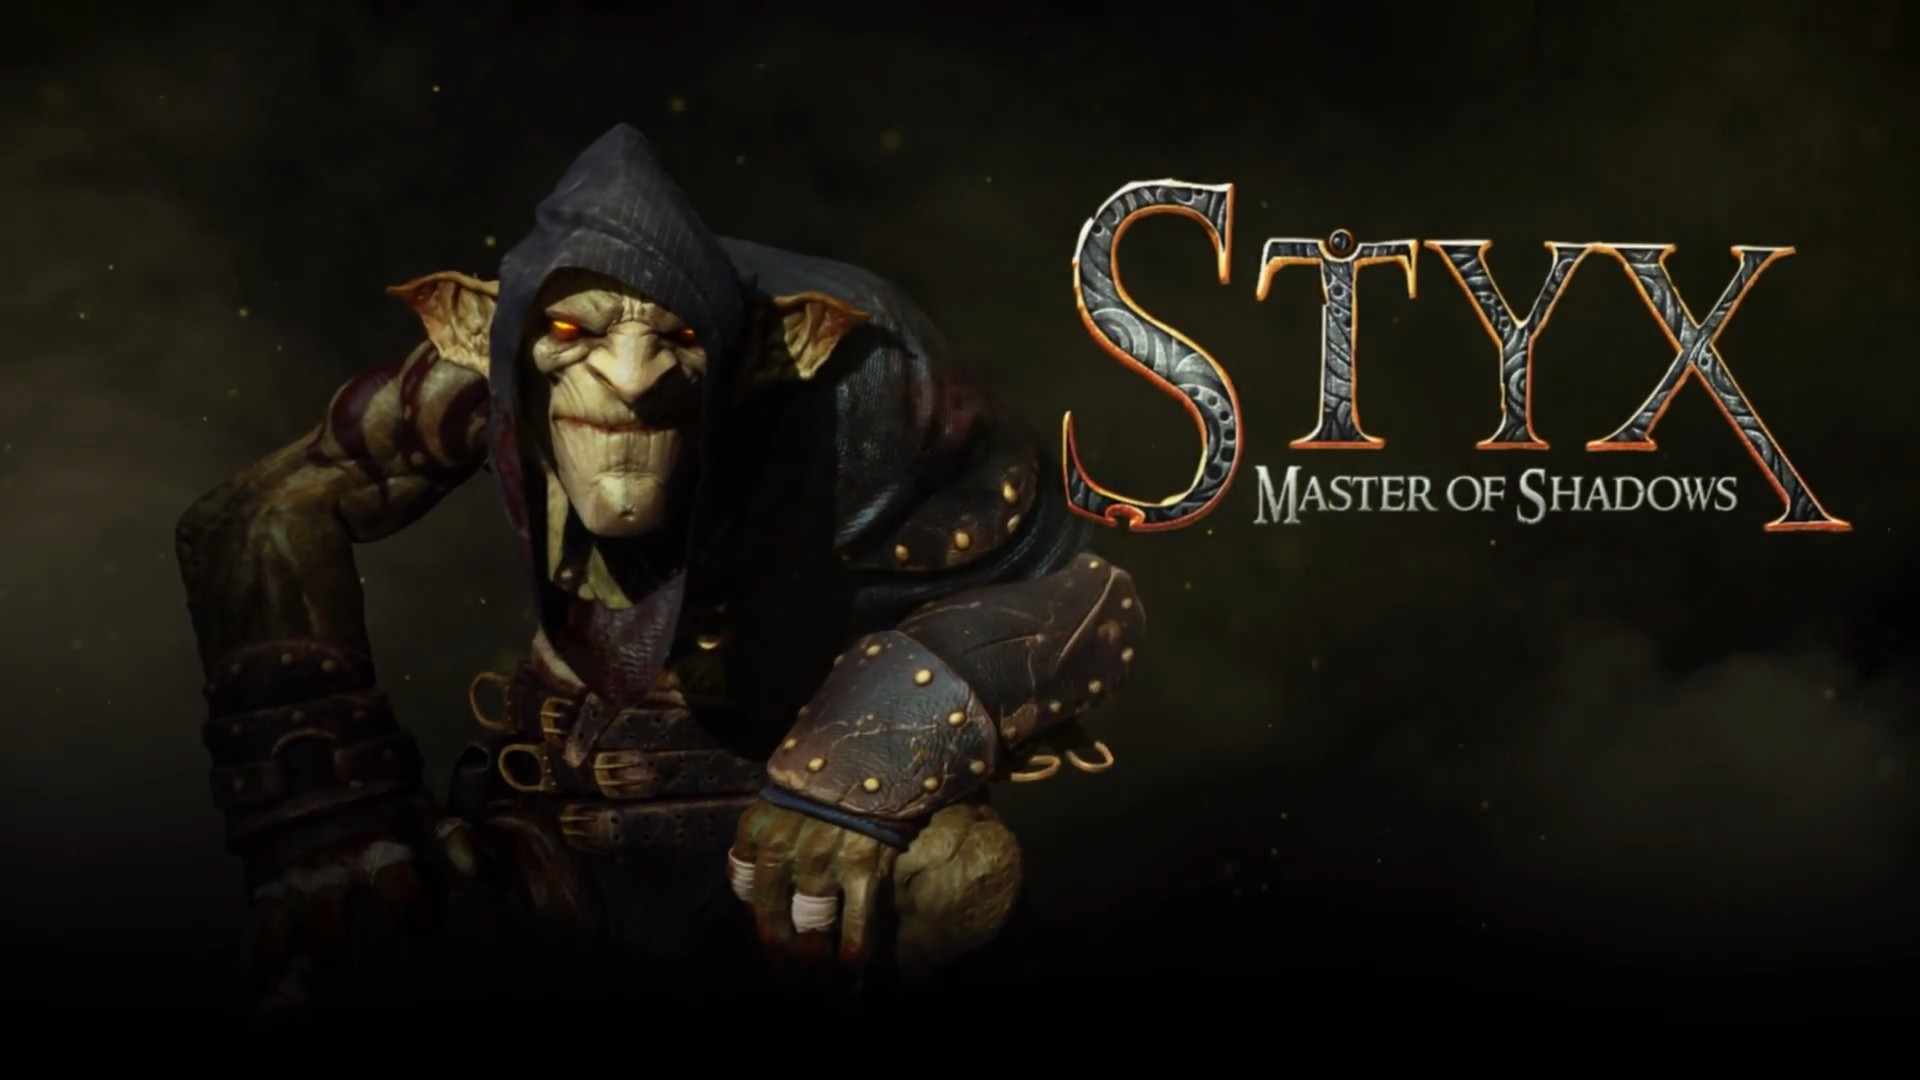 STYX MASTER OF SHADOWS